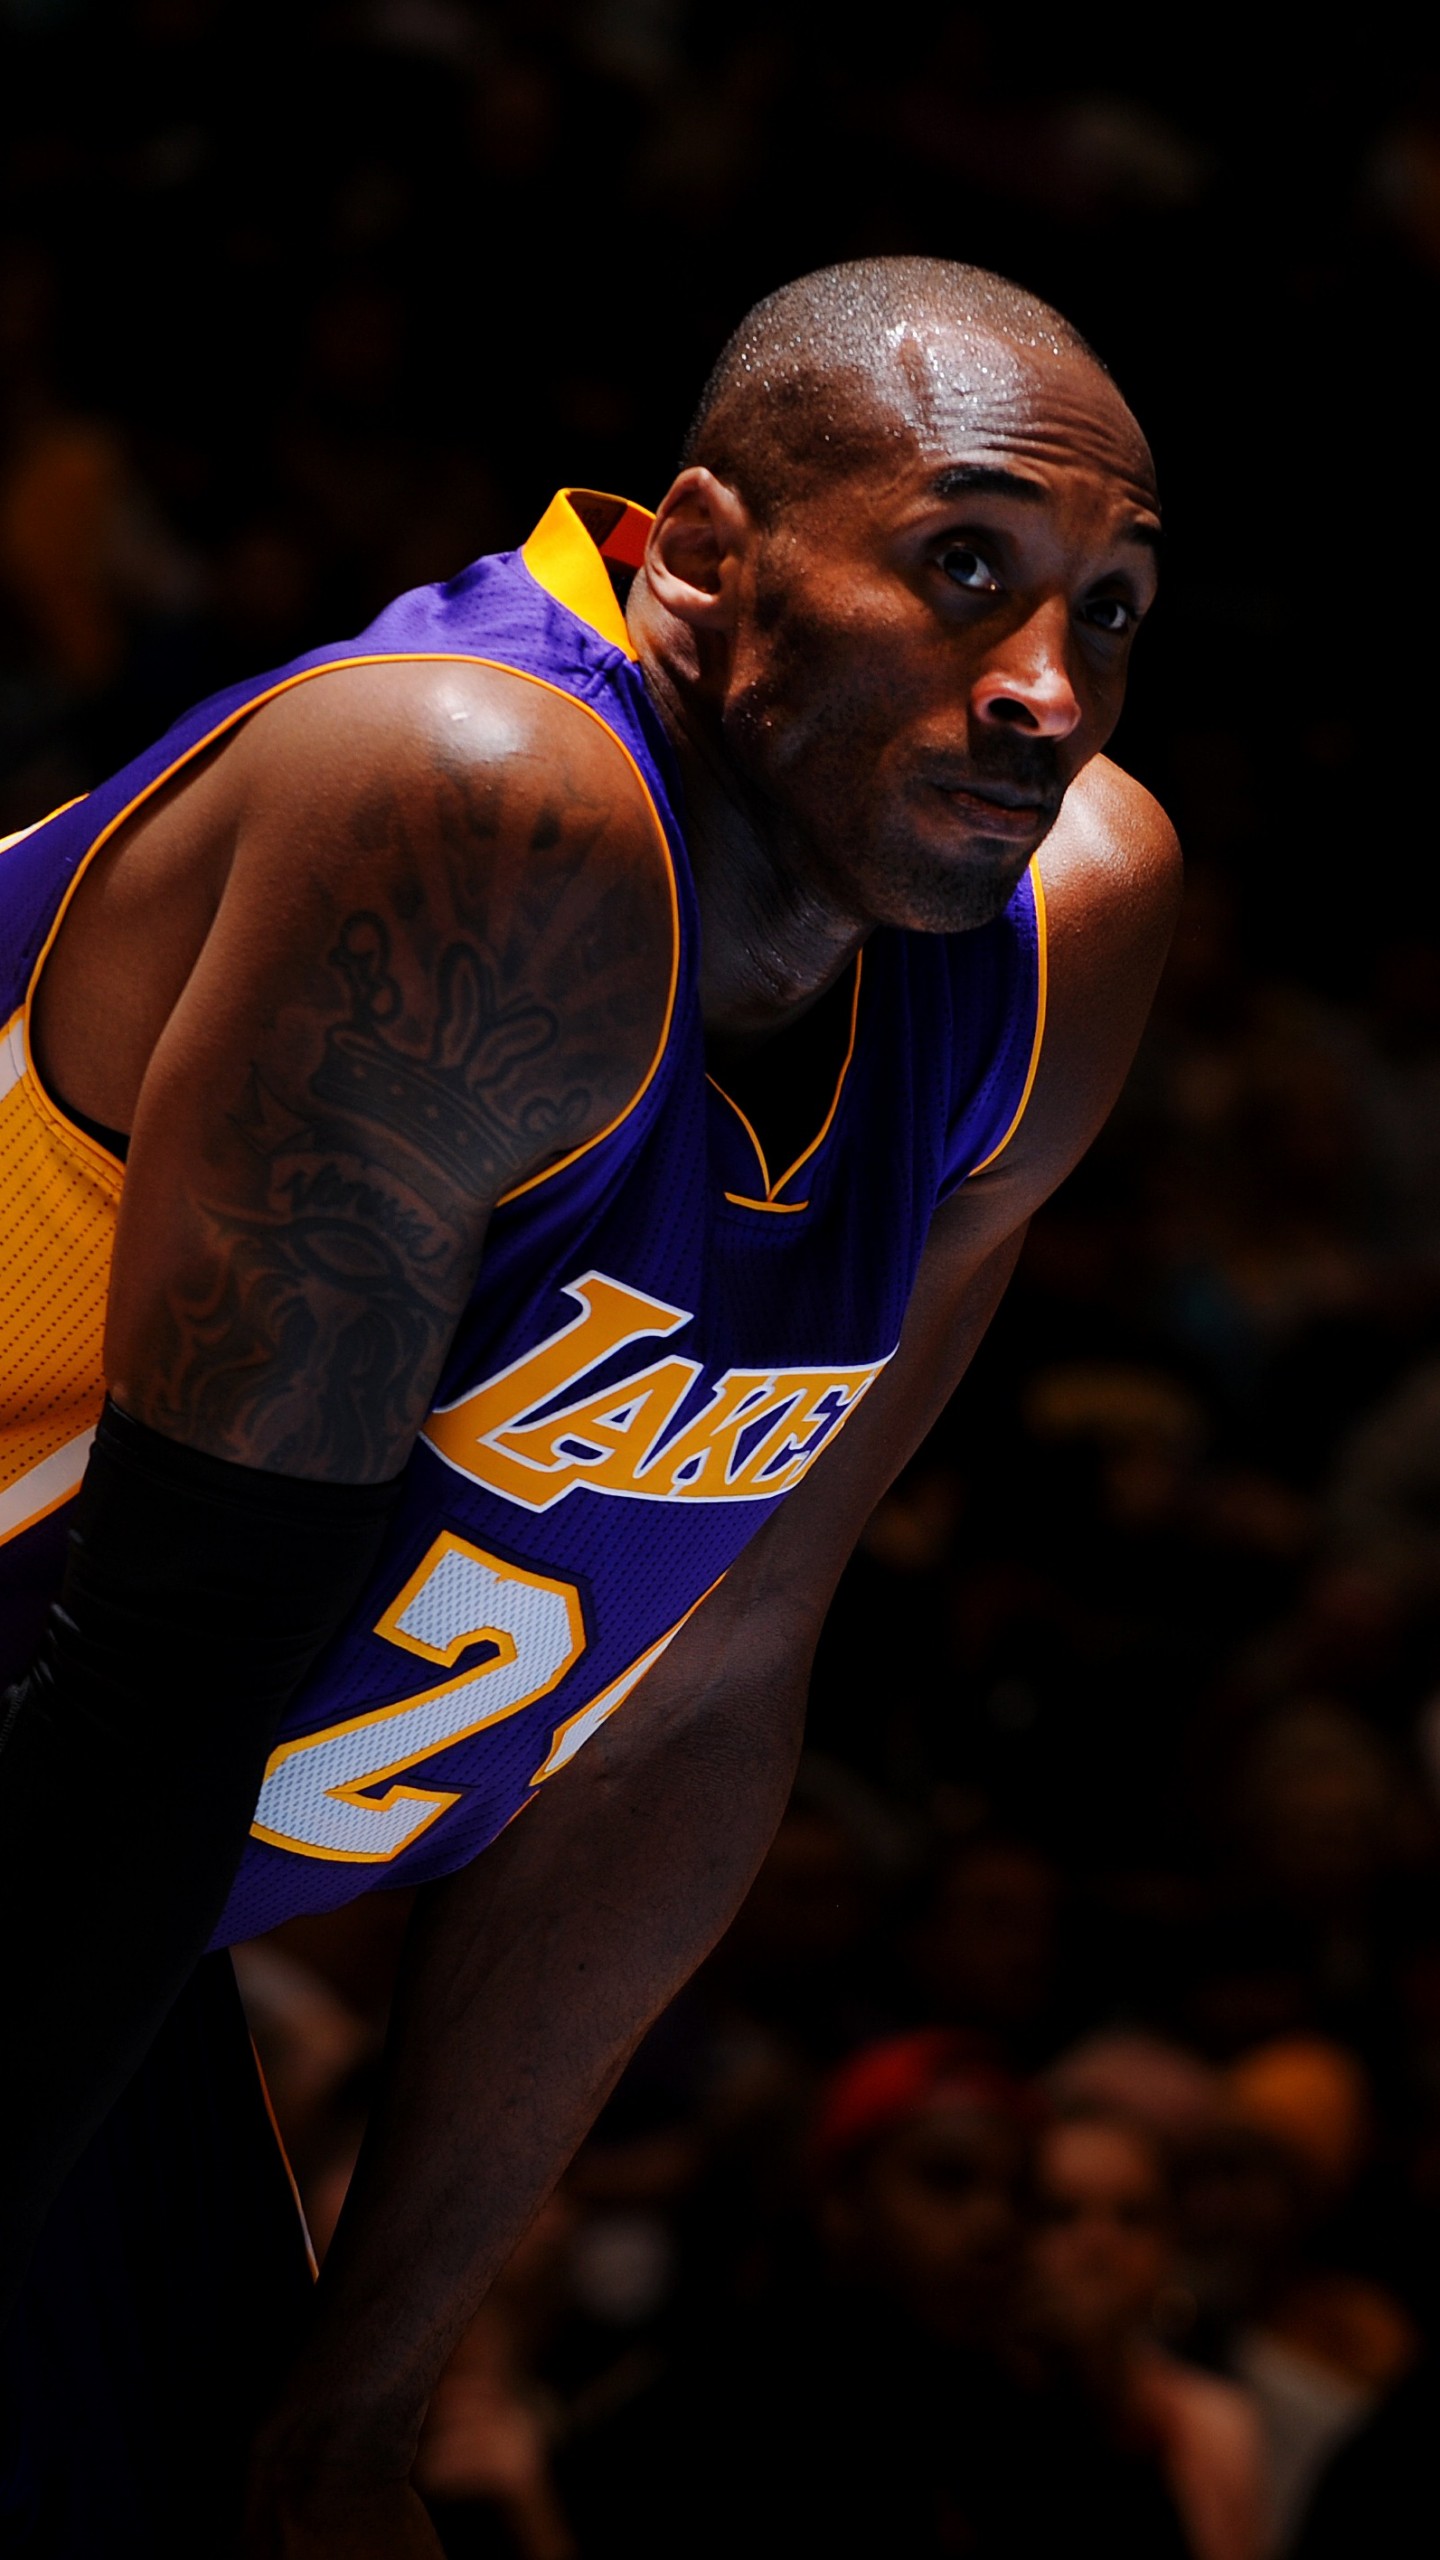 Wallpaper NBA, Kobe Bryant, Best Basketball Players of 2015, Los Angeles Lakers, basketball